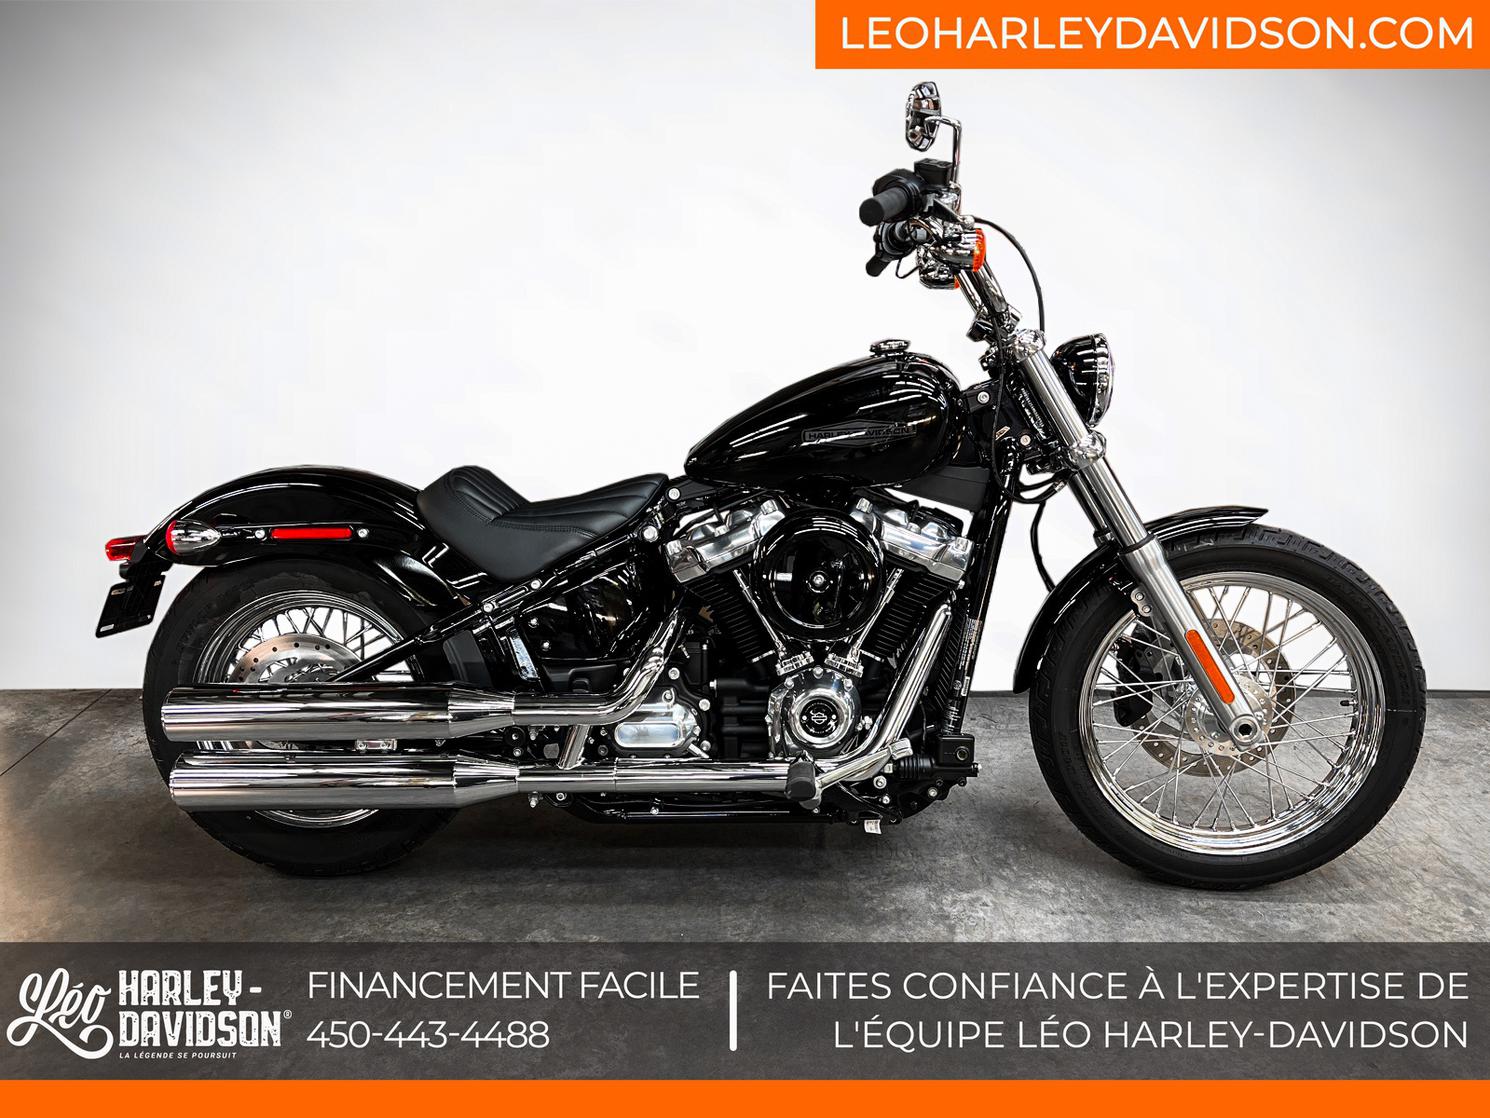 2021 Harley-Davidson ST-Softail Custom - FXST